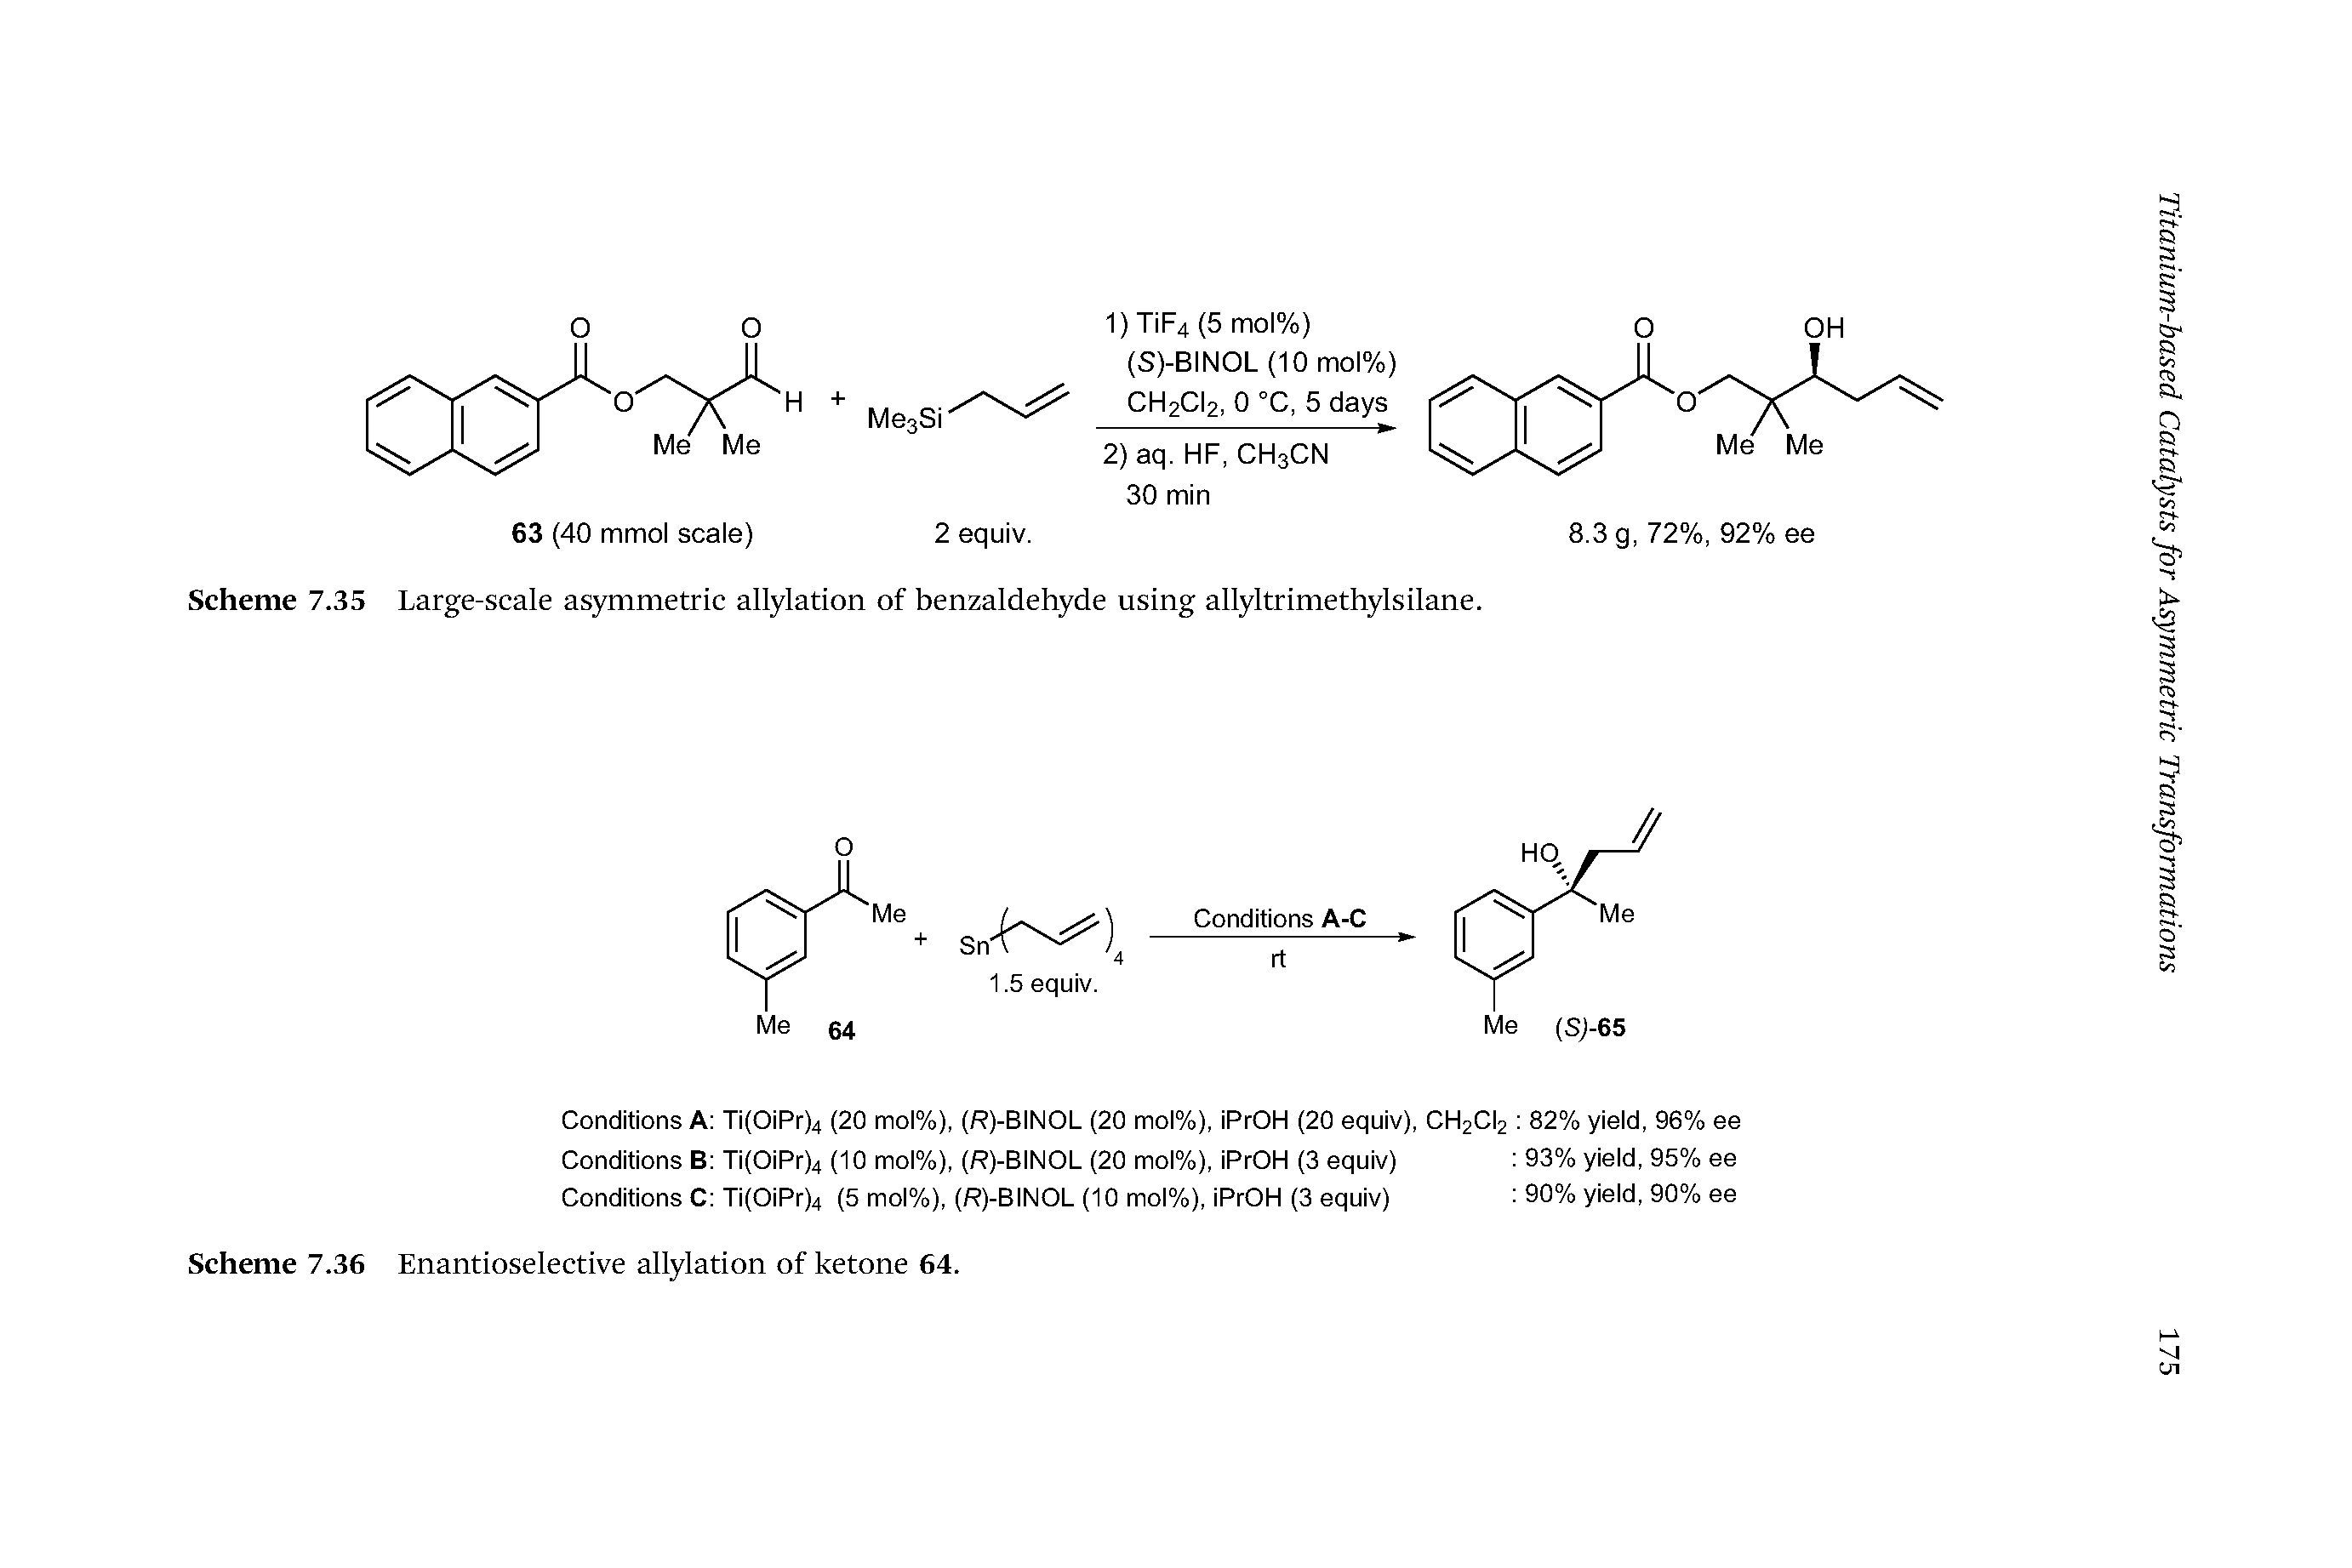 Scheme 7.35 Large-scale asymmetric allylation of benzaldehyde using allyltrimethylsilane.